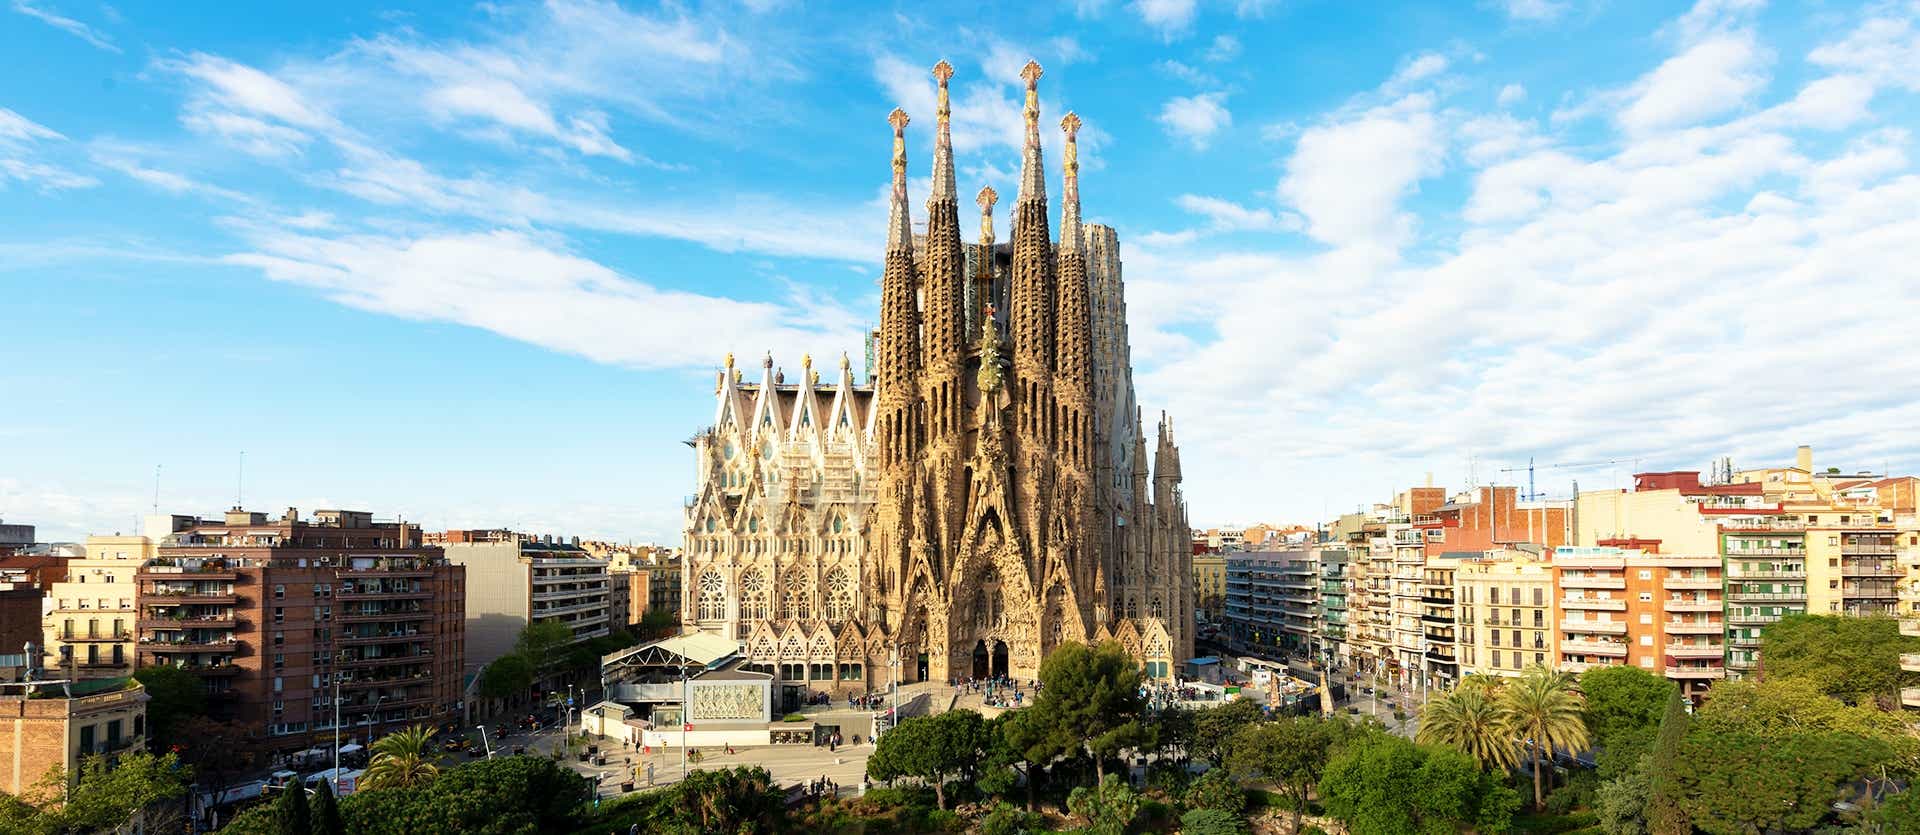 Sagrada Familia <span class="iconos separador"></span> Barcelona  <span class="iconos separador"></span> España